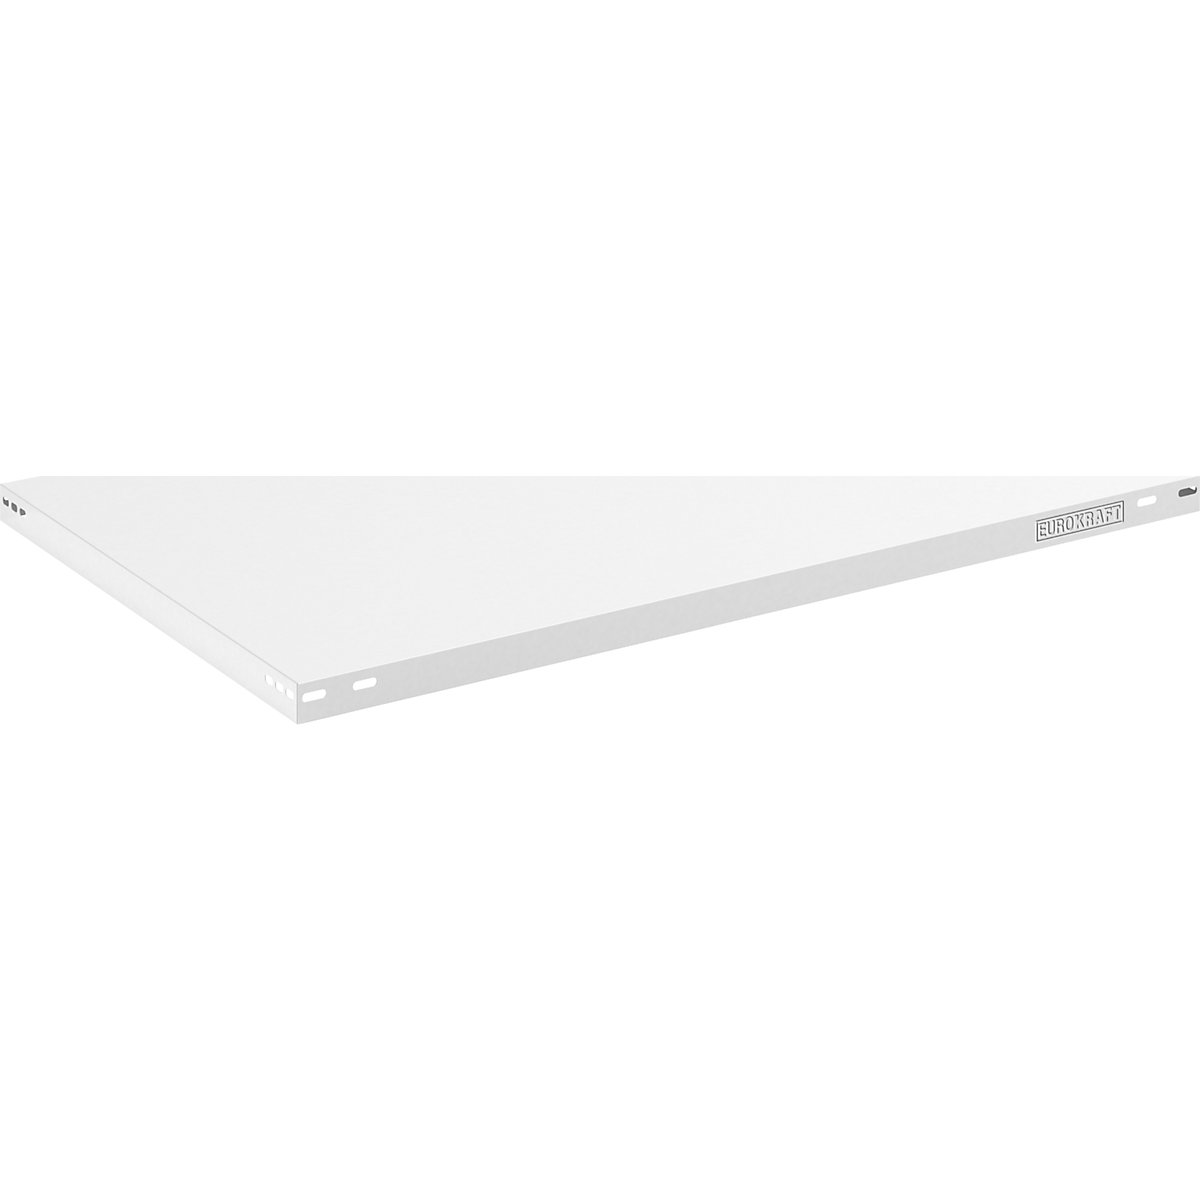 Shelf – eurokraft pro, plastic-coated, WxD 1000 x 800 mm